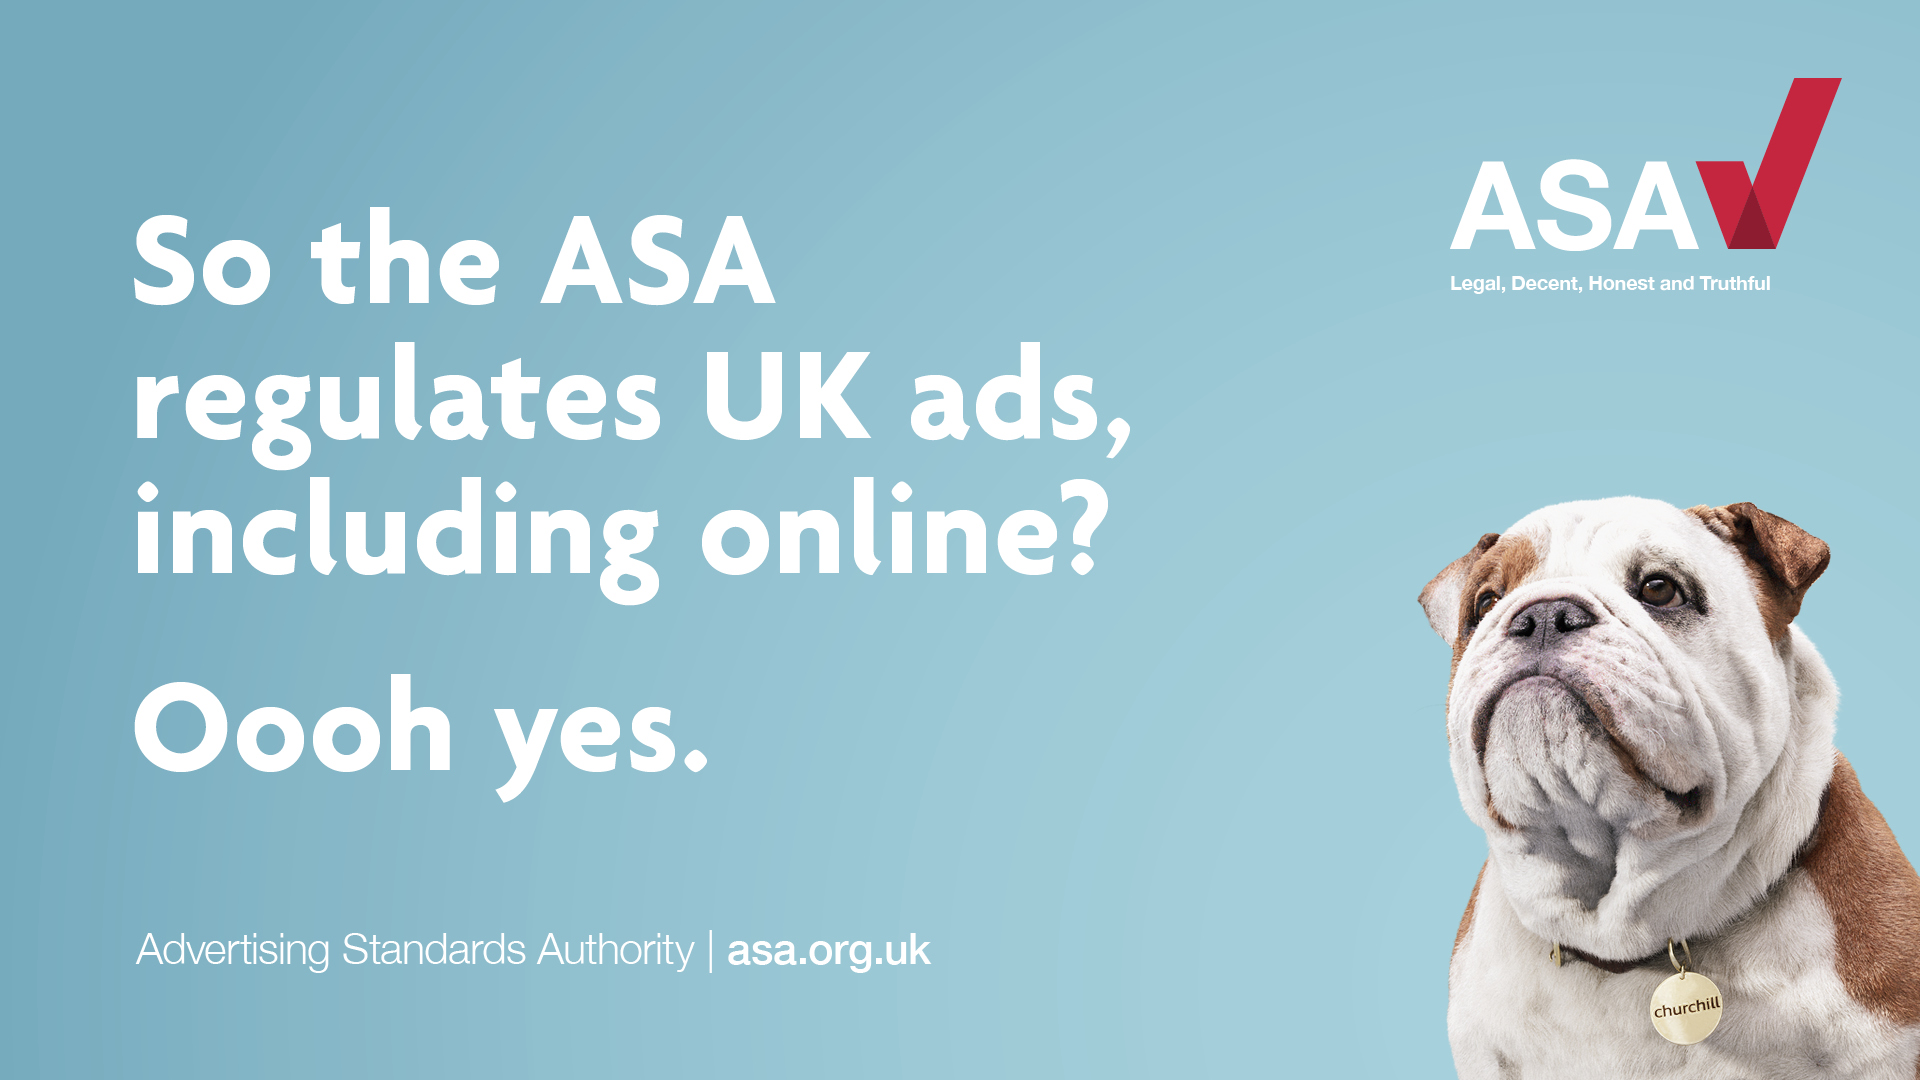 ASA's latest awareness campaign